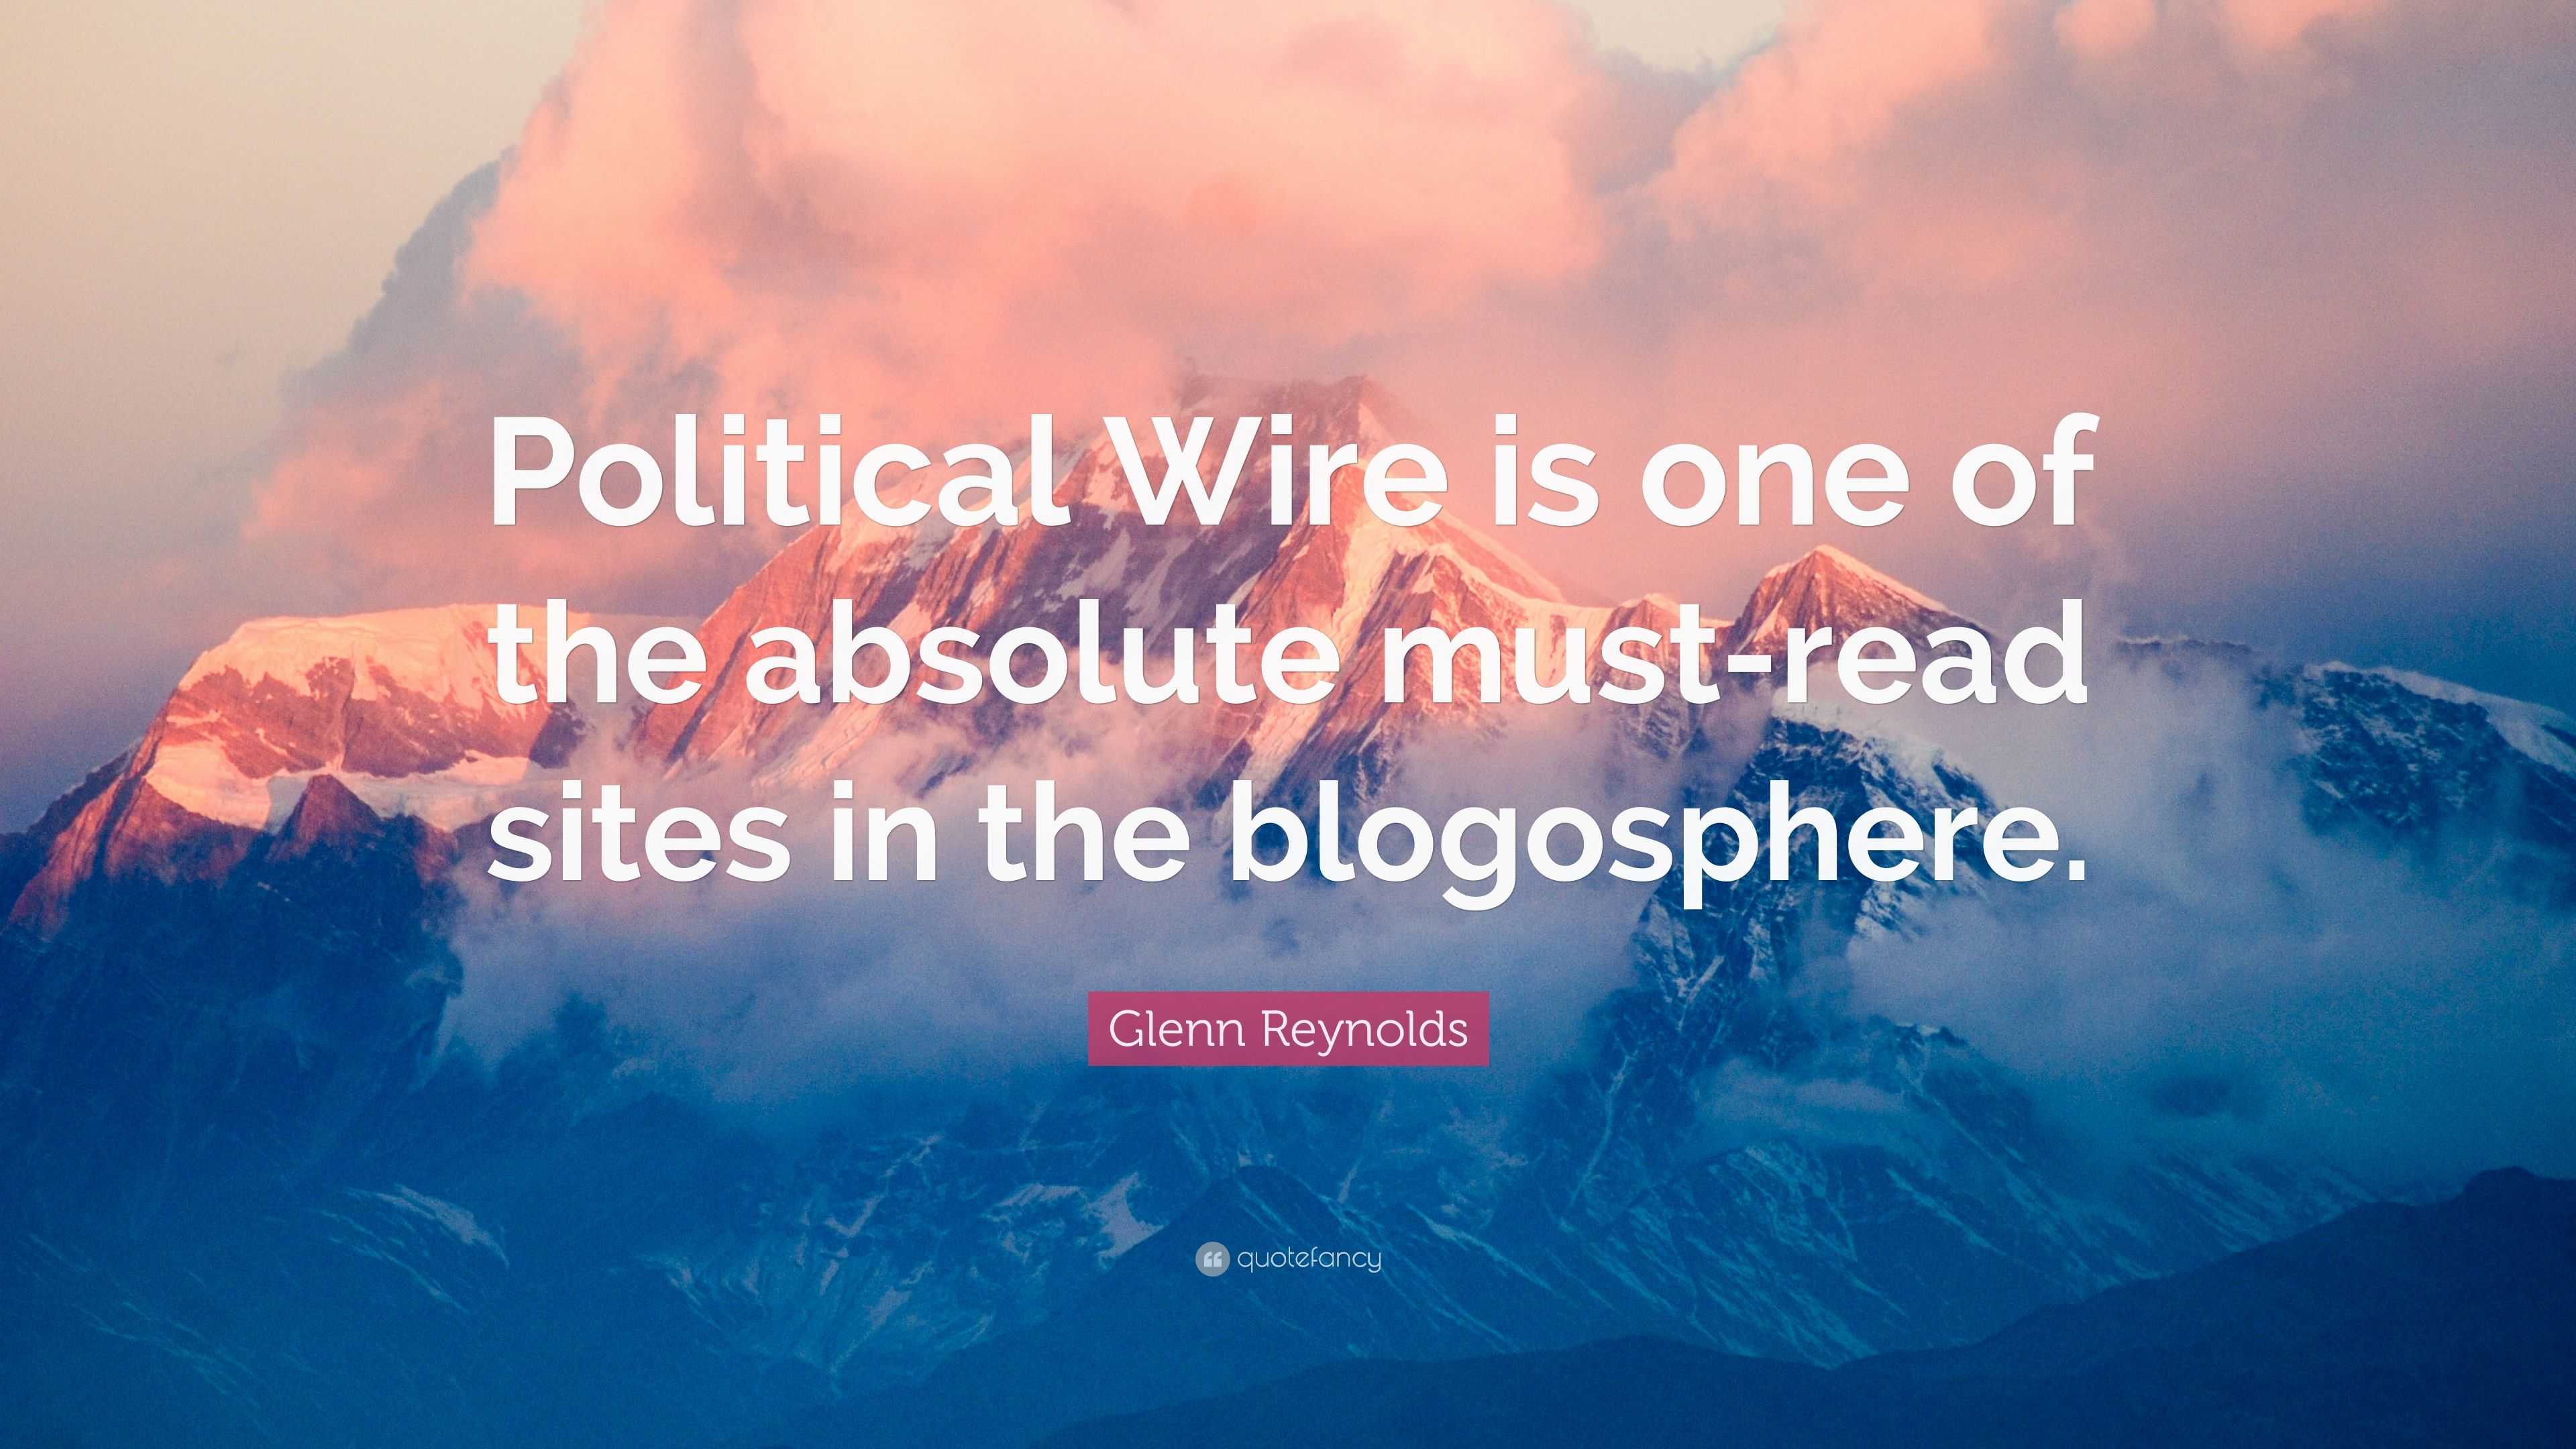 political wire